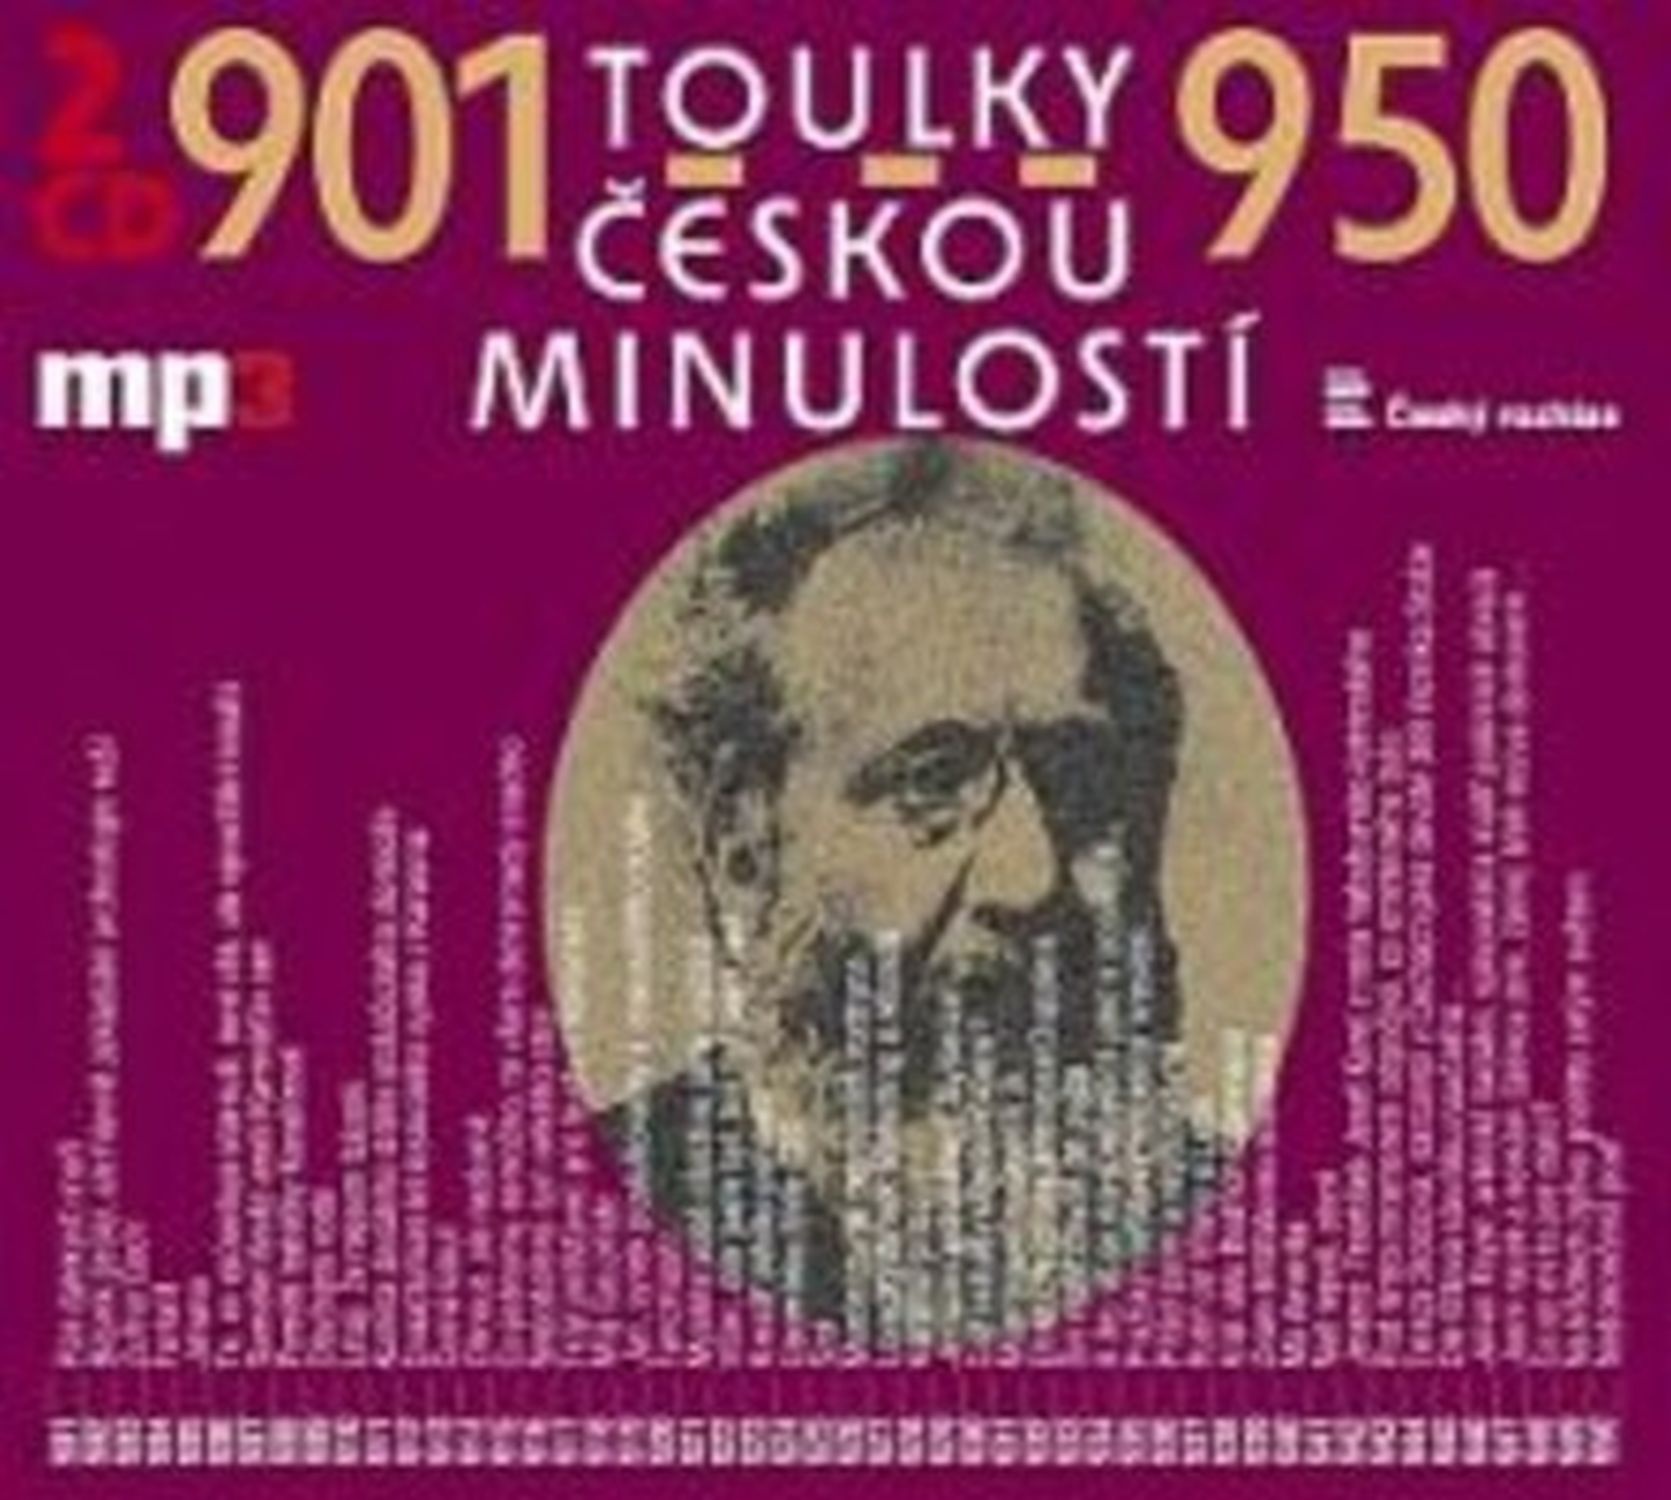 CD Shop - VARIOUS TOULKY CESKOU MINULOSTI 901-950 (MP3-